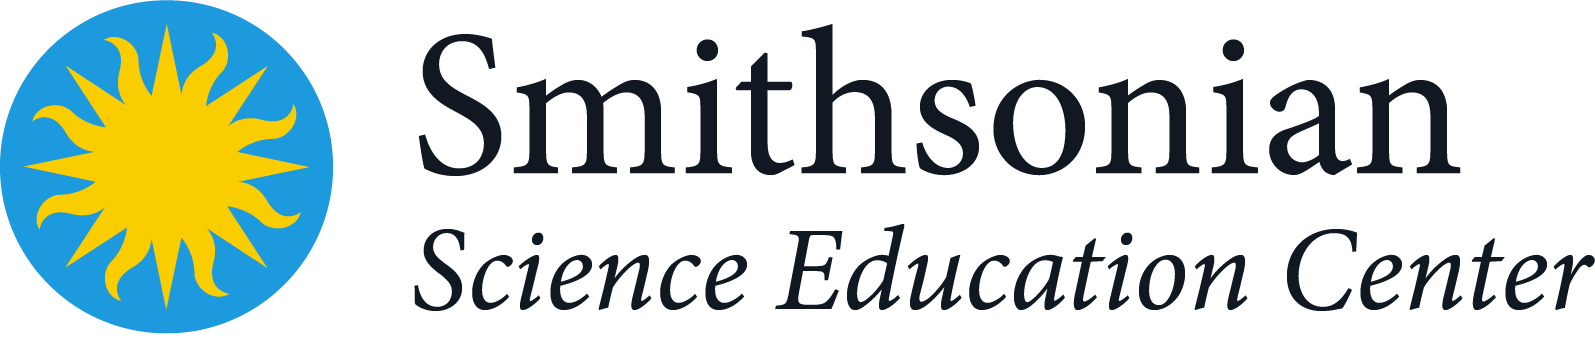 Smithsonian Science Education Center logo